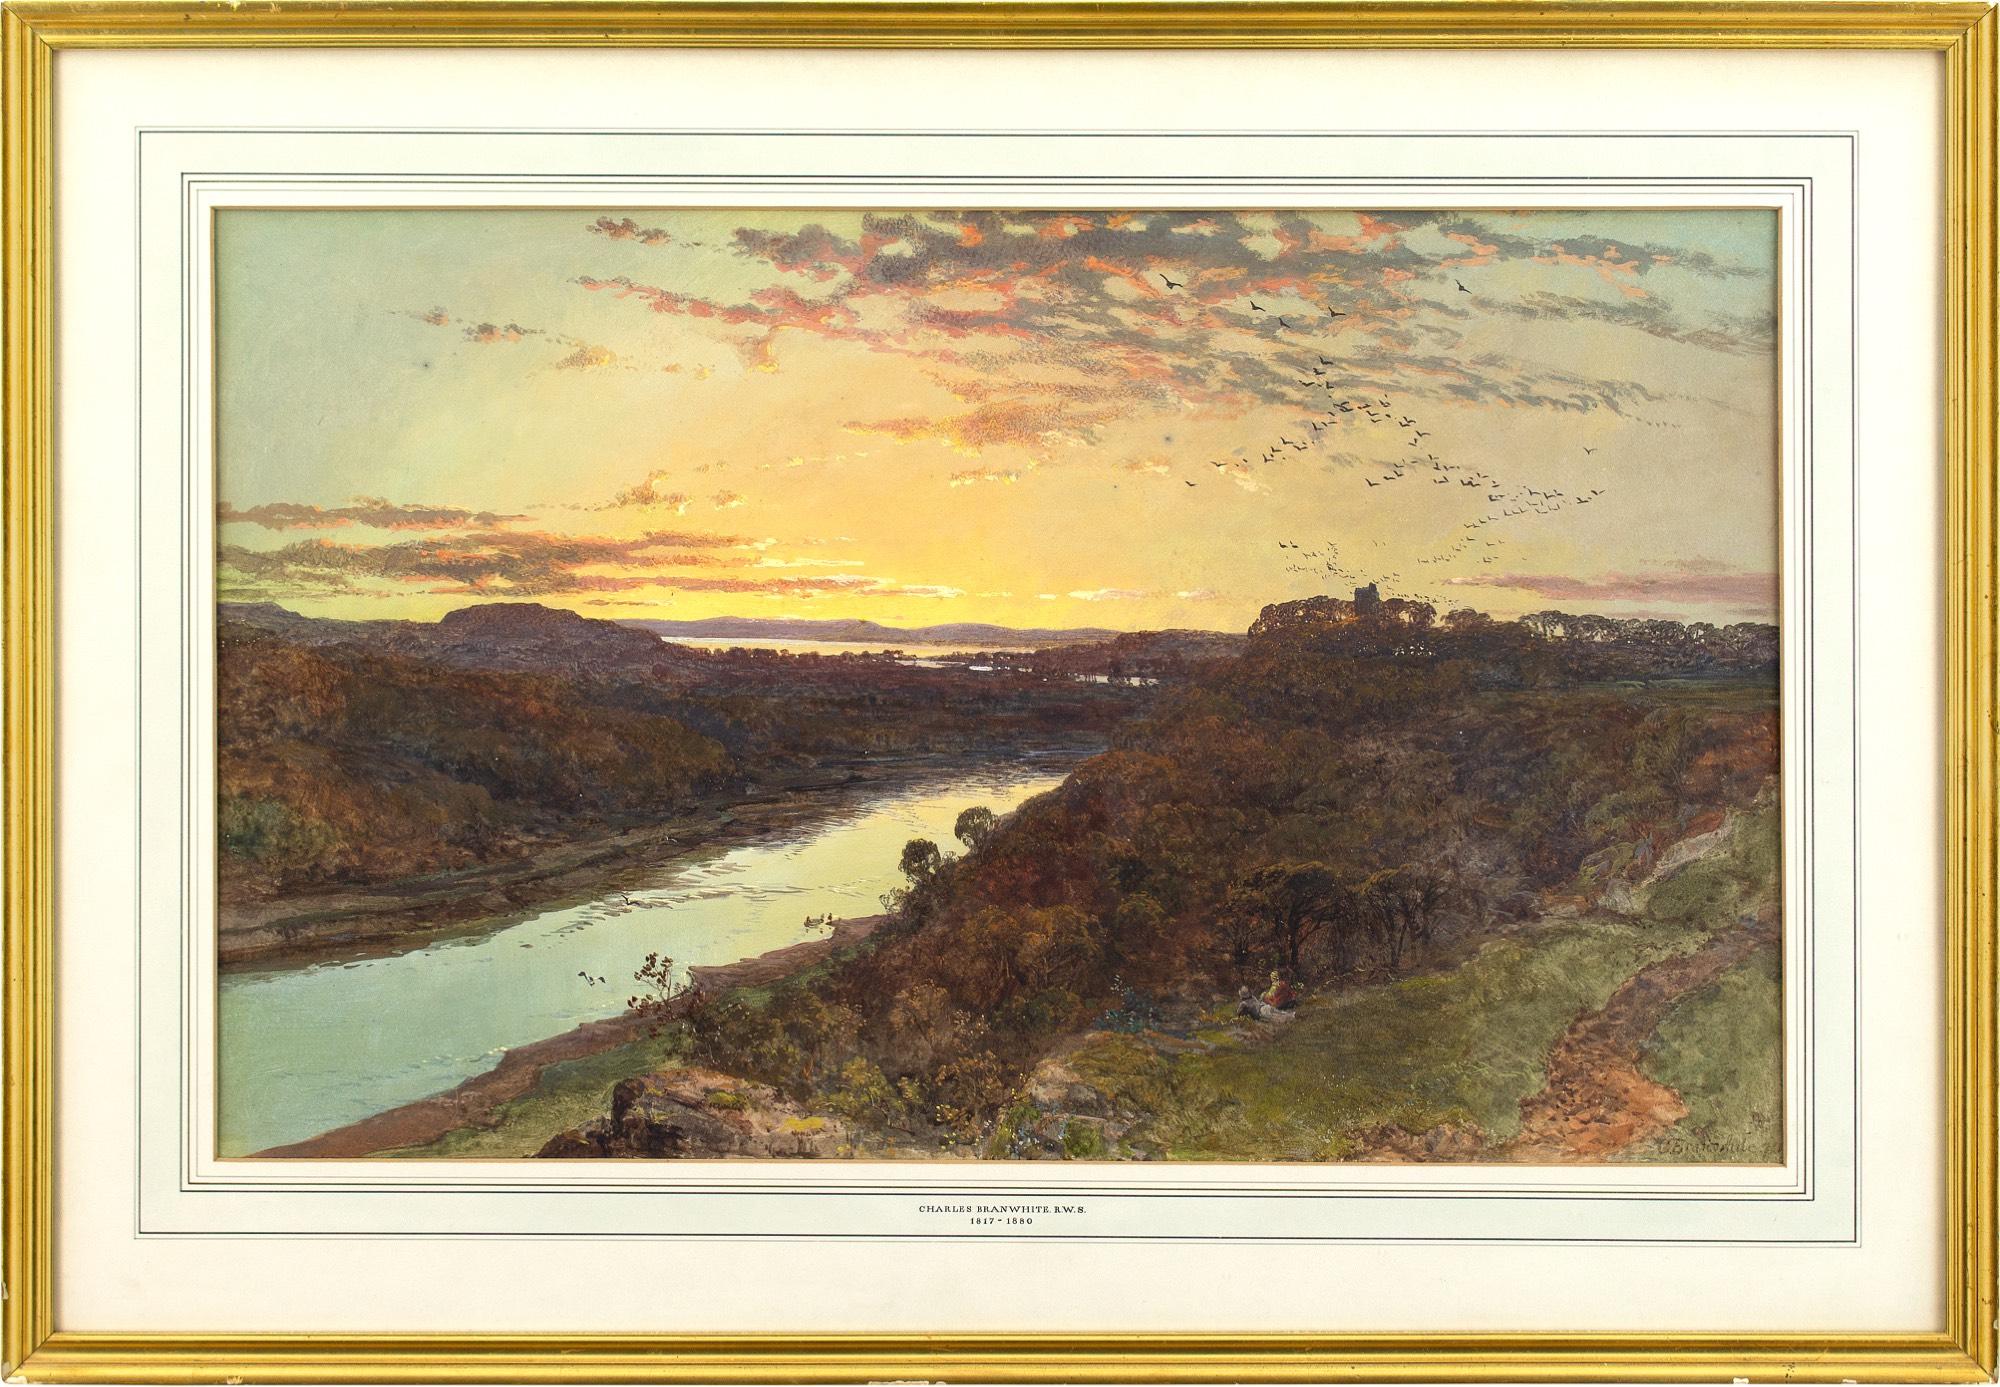 CHARLES BRANWHITE Landscape Art - Charles Branwhite, River Landscape With Sunset, Watercolour